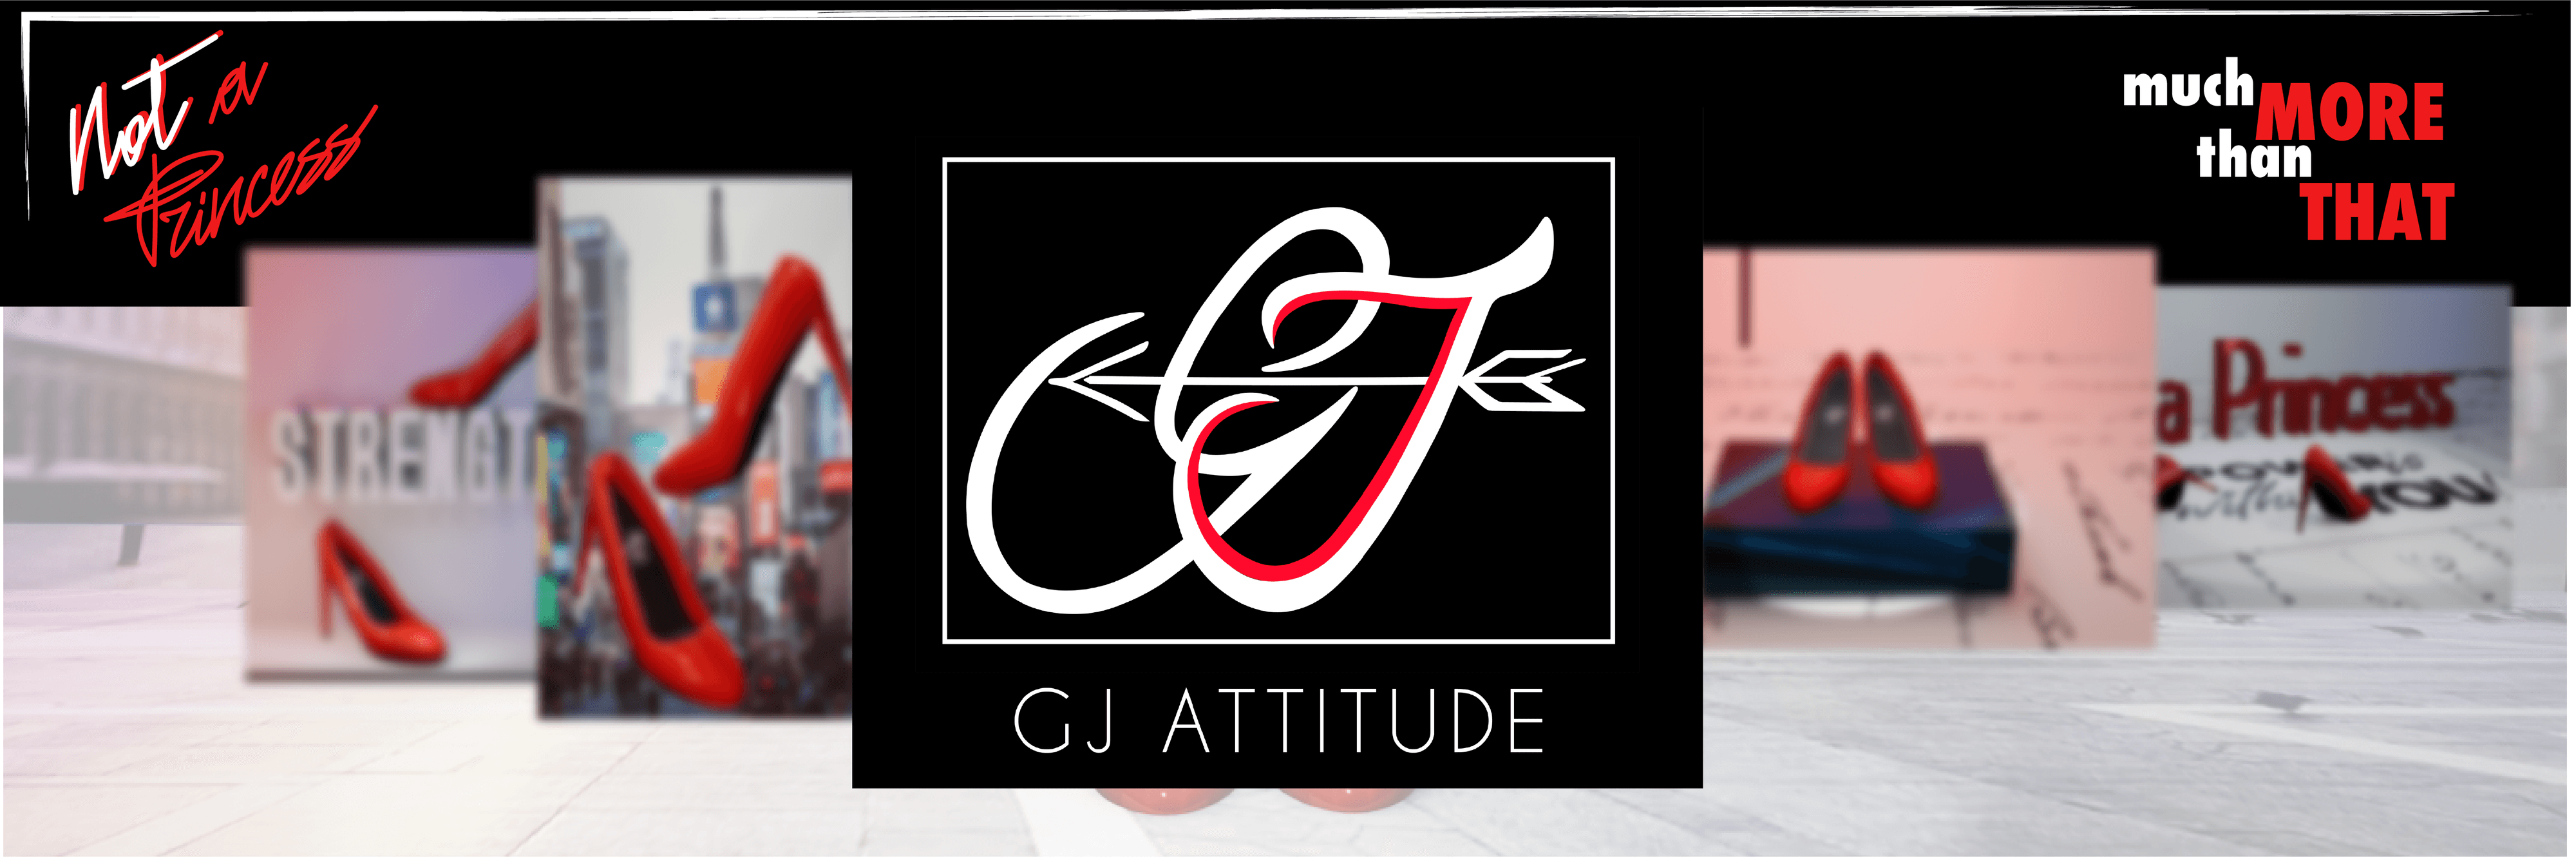 Gj_Attitude 横幅